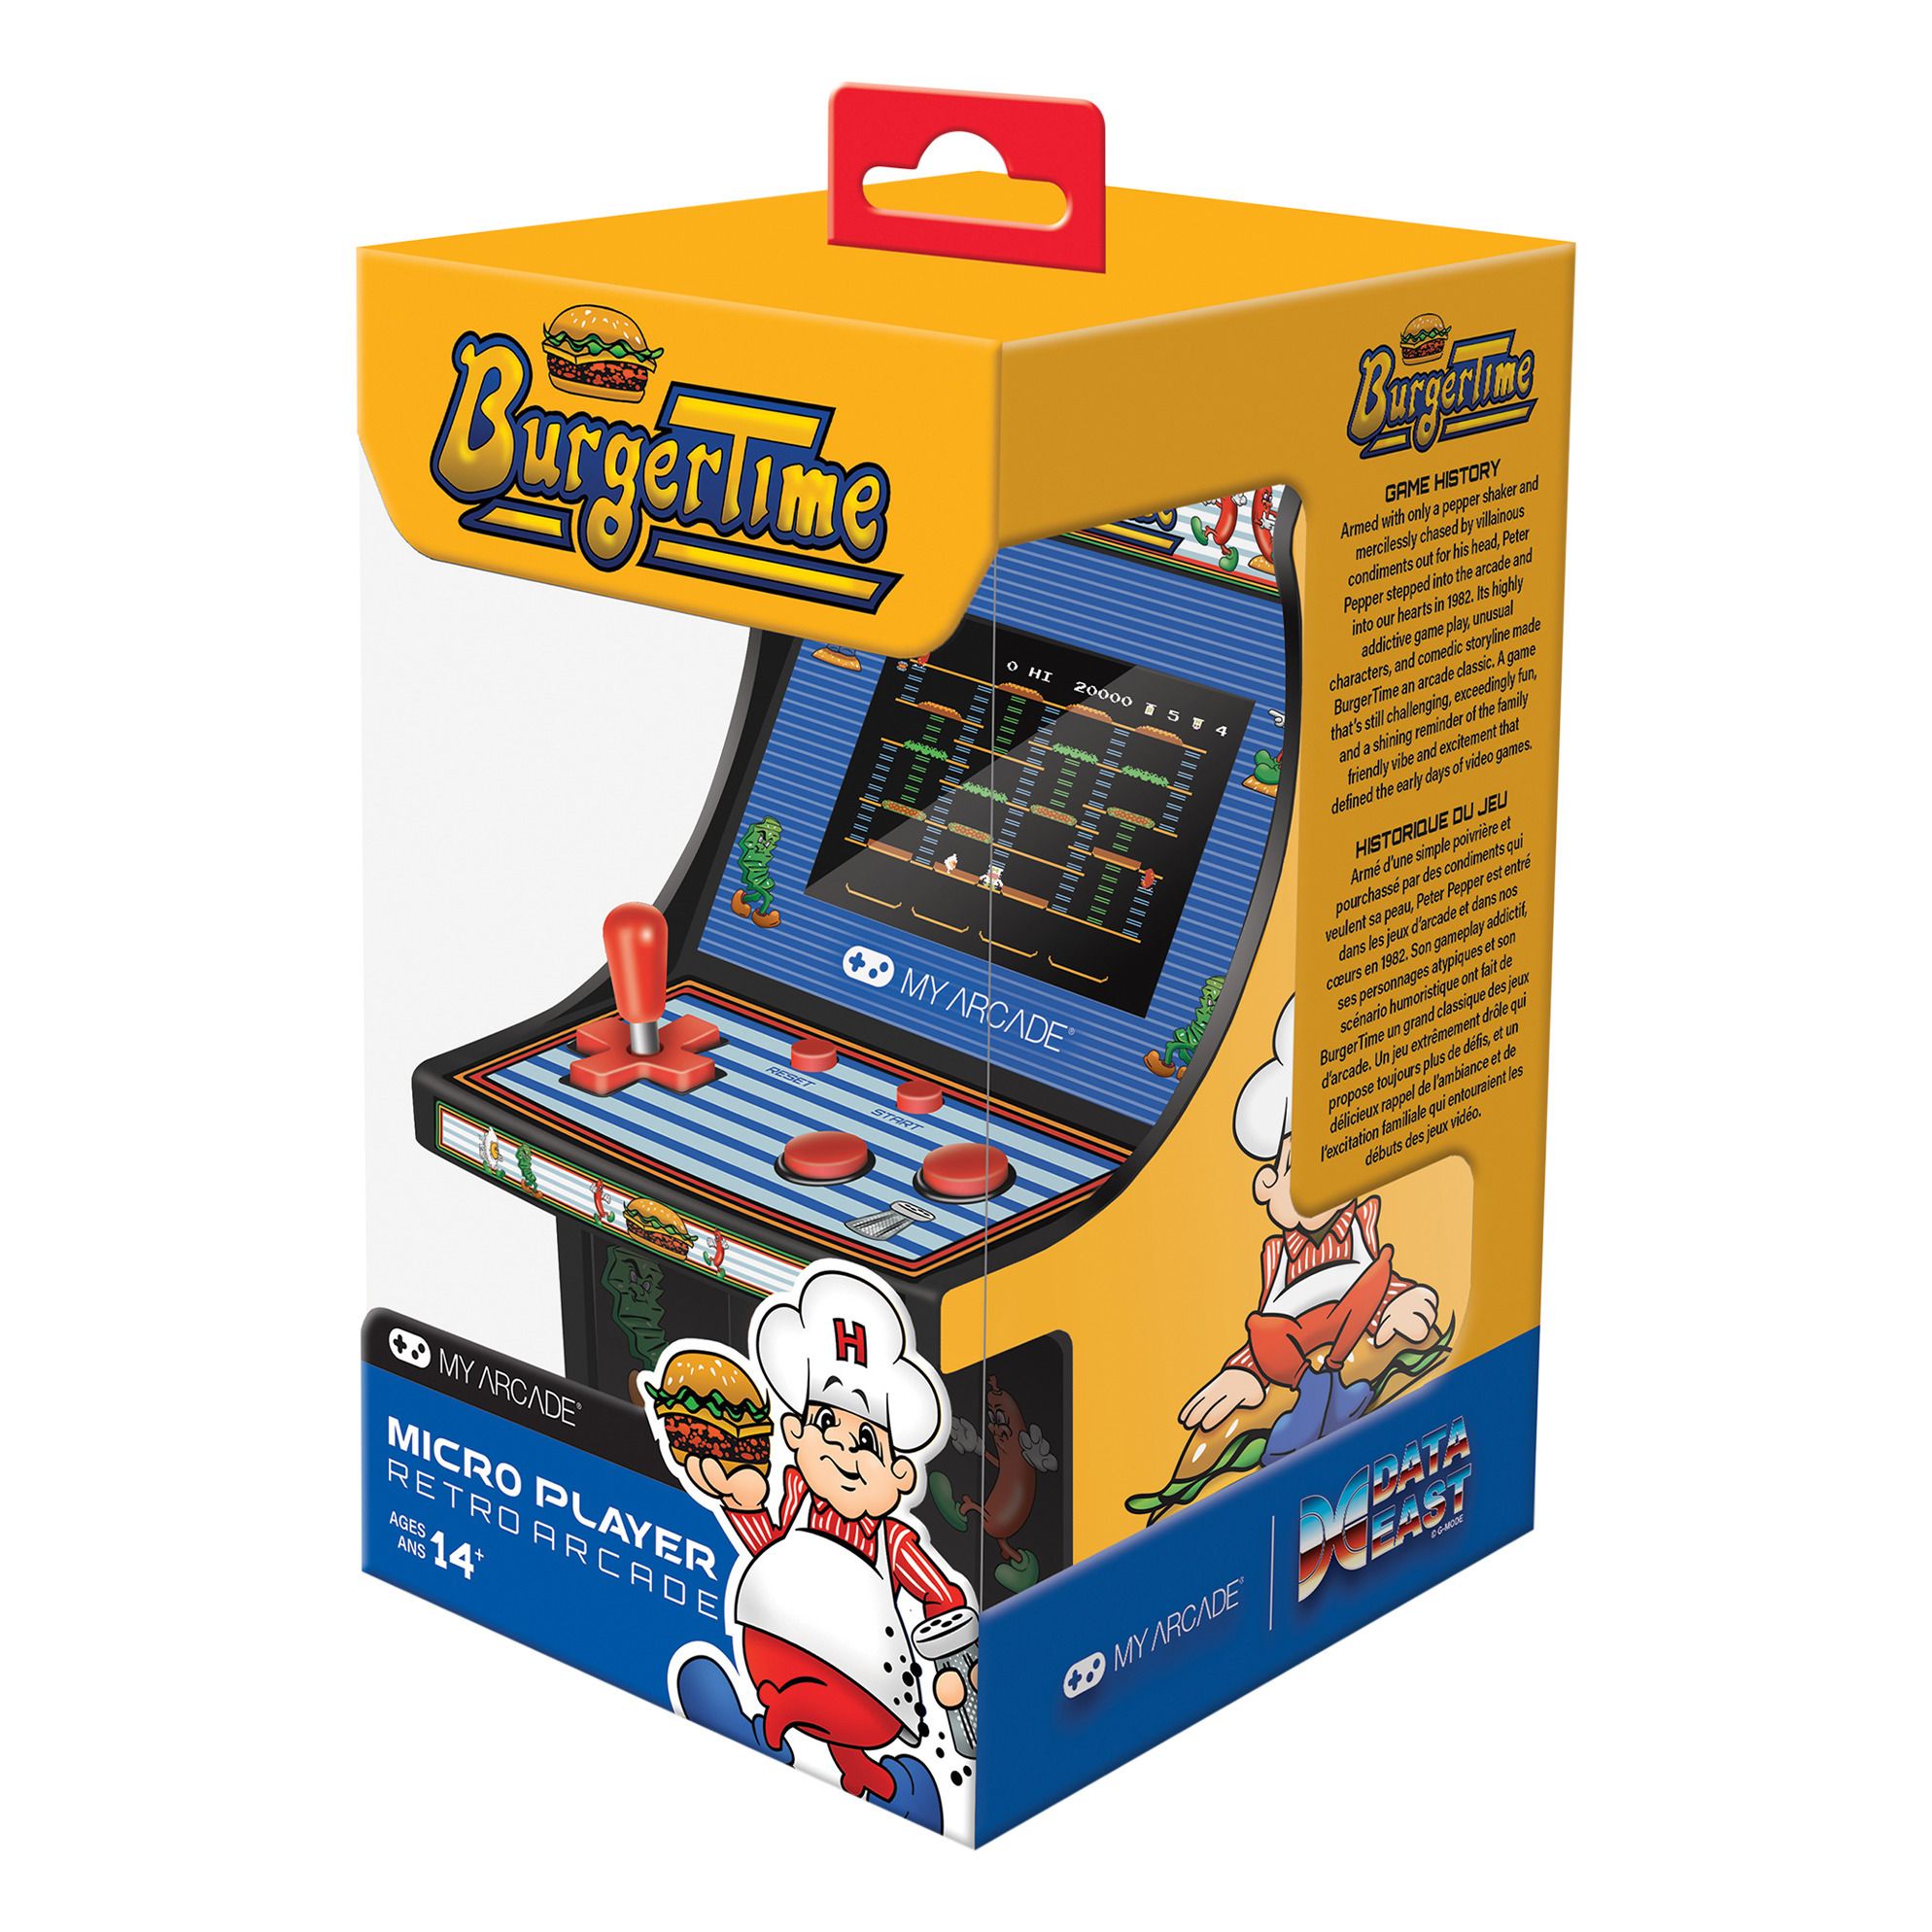 My Arcade 6" BurgerTime Retro Arcade Micro Player New In Box Mini Arcade Game 